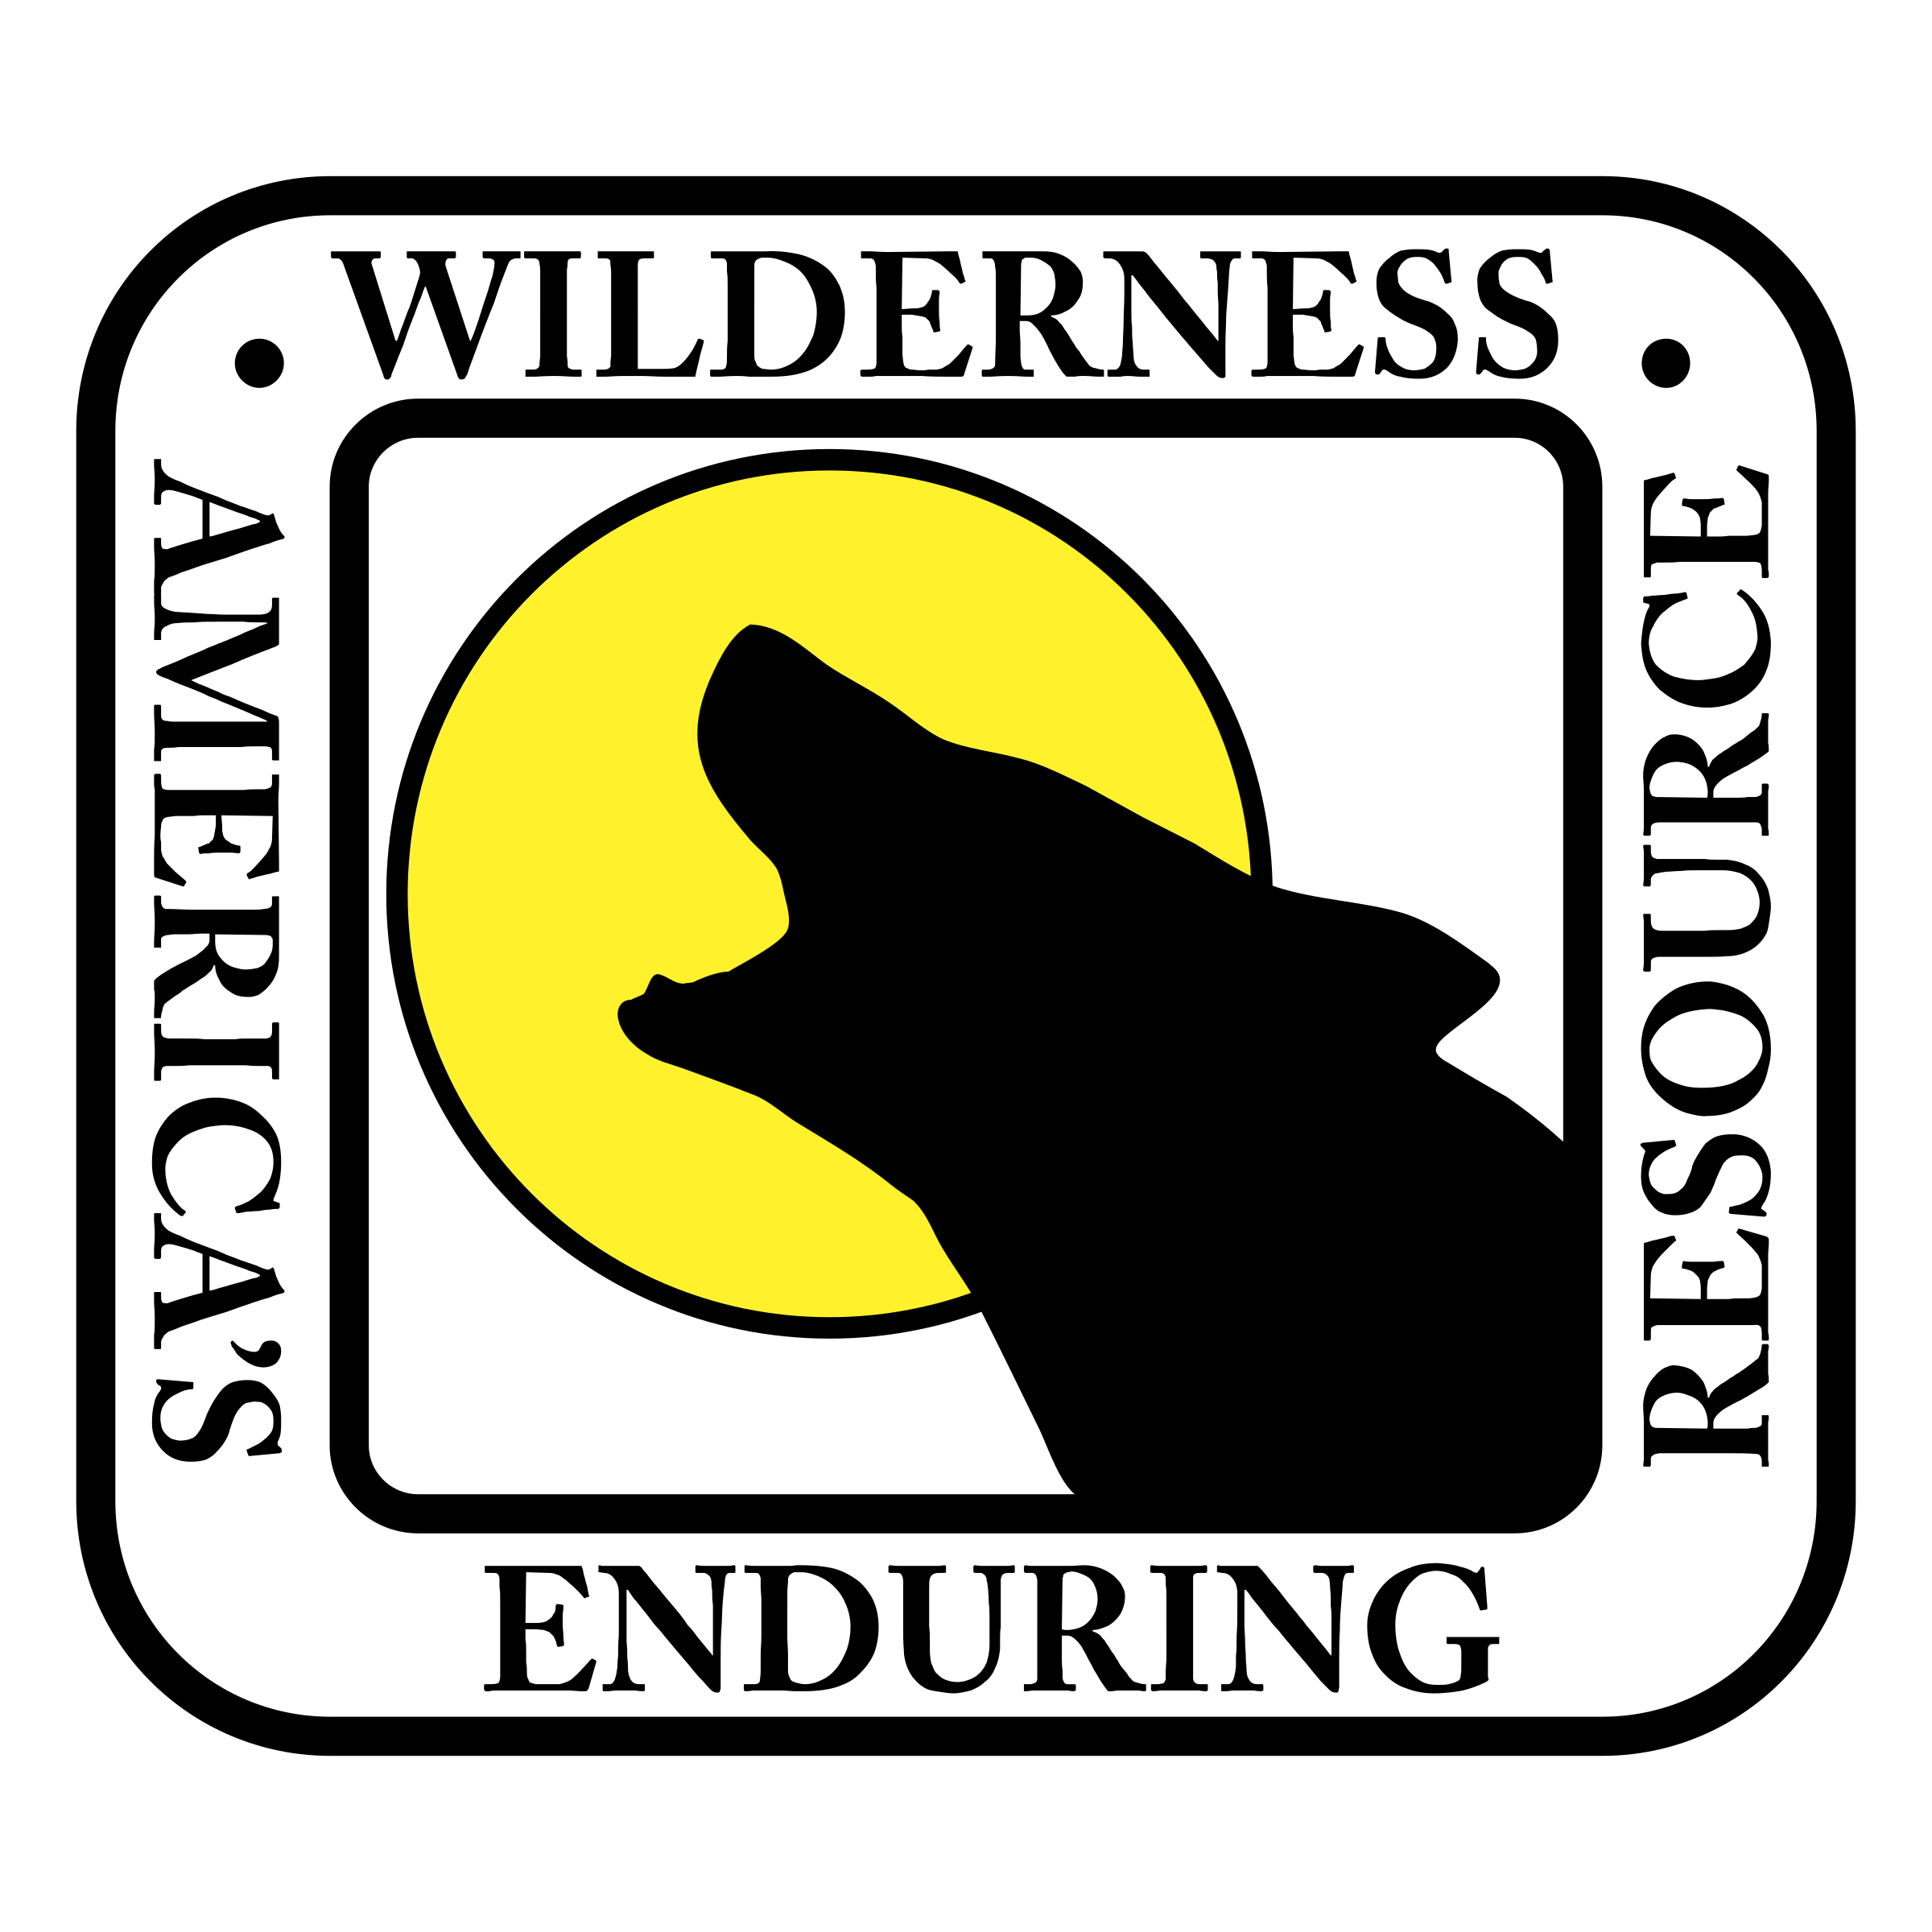 Wilderness Logo - Wilderness Logo PNG Transparent & SVG Vector - Freebie Supply